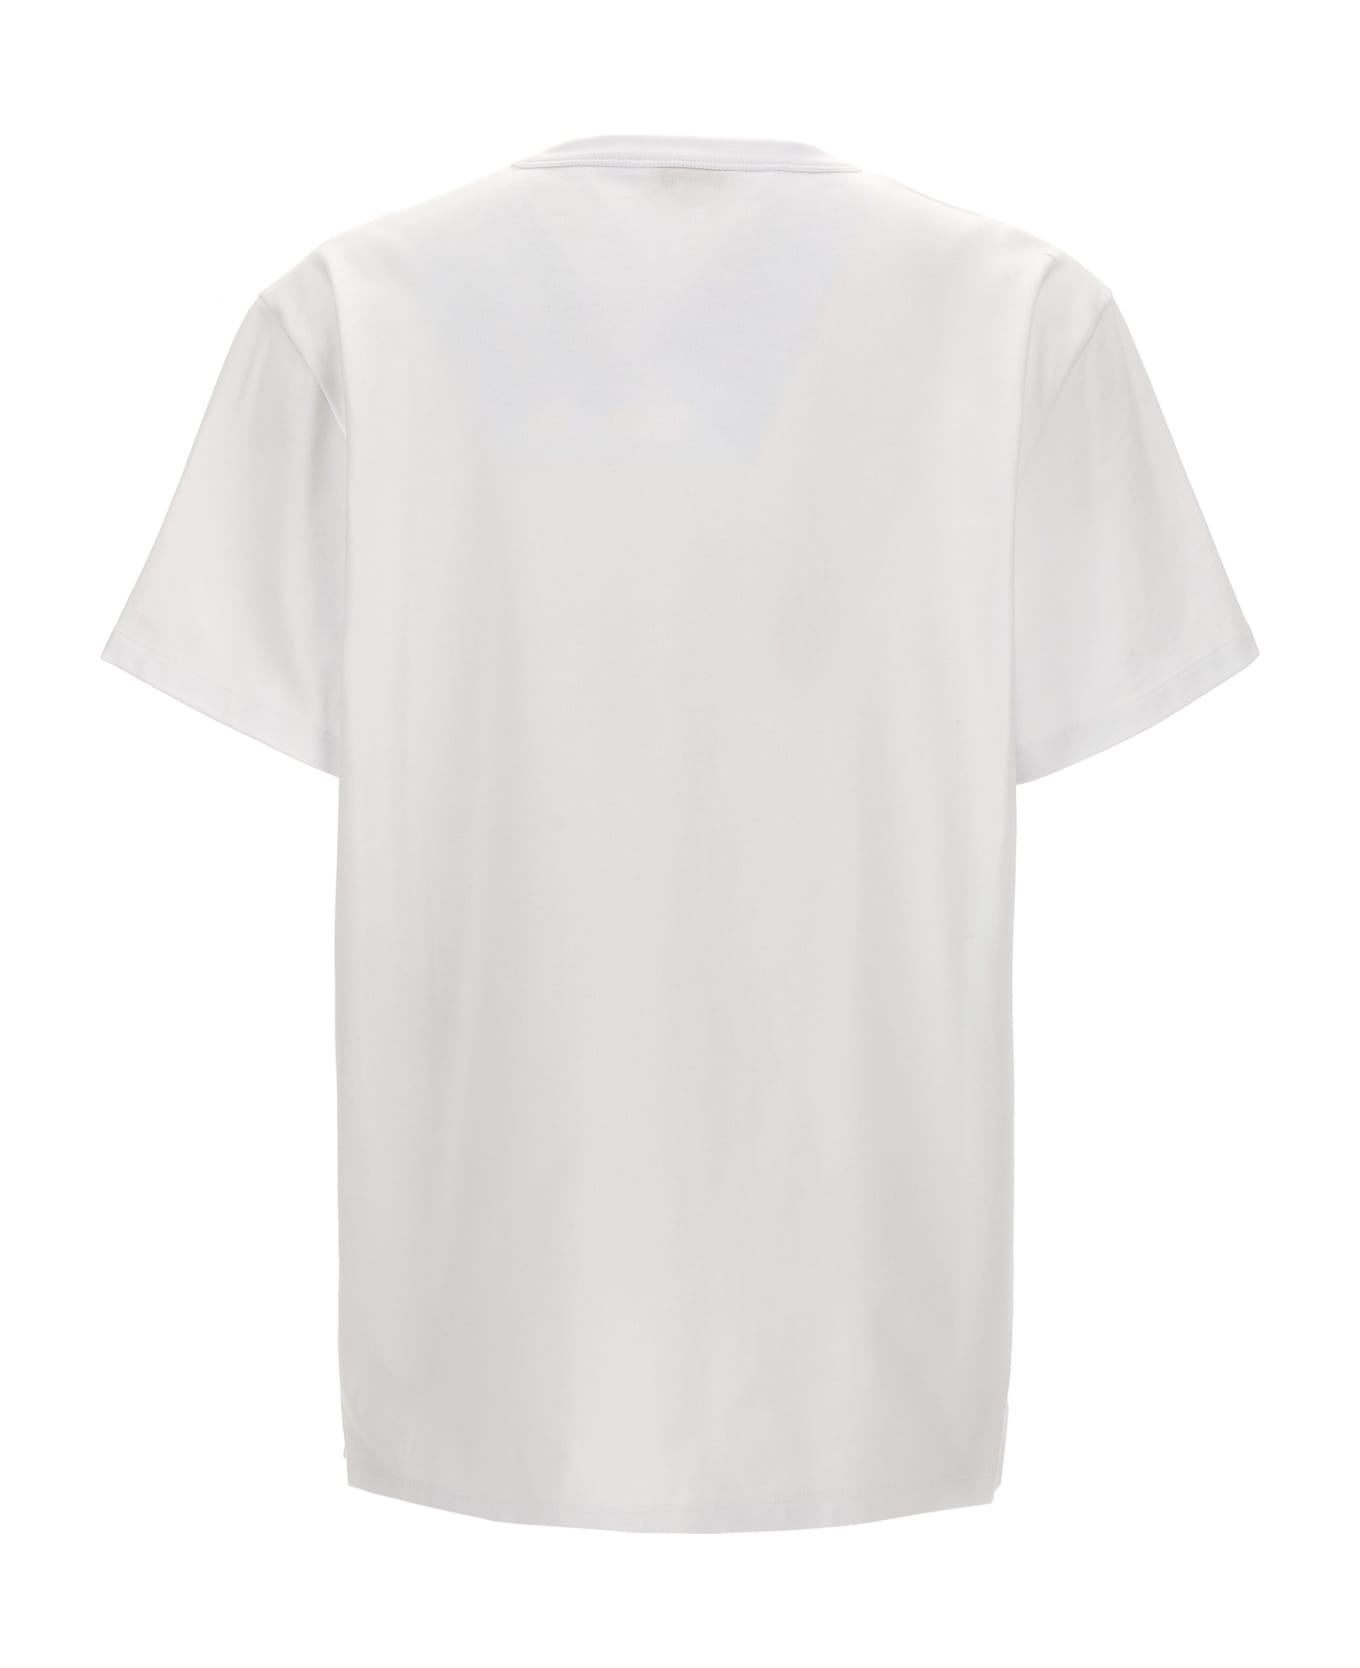 Alexander McQueen Printed T-shirt - White/Black